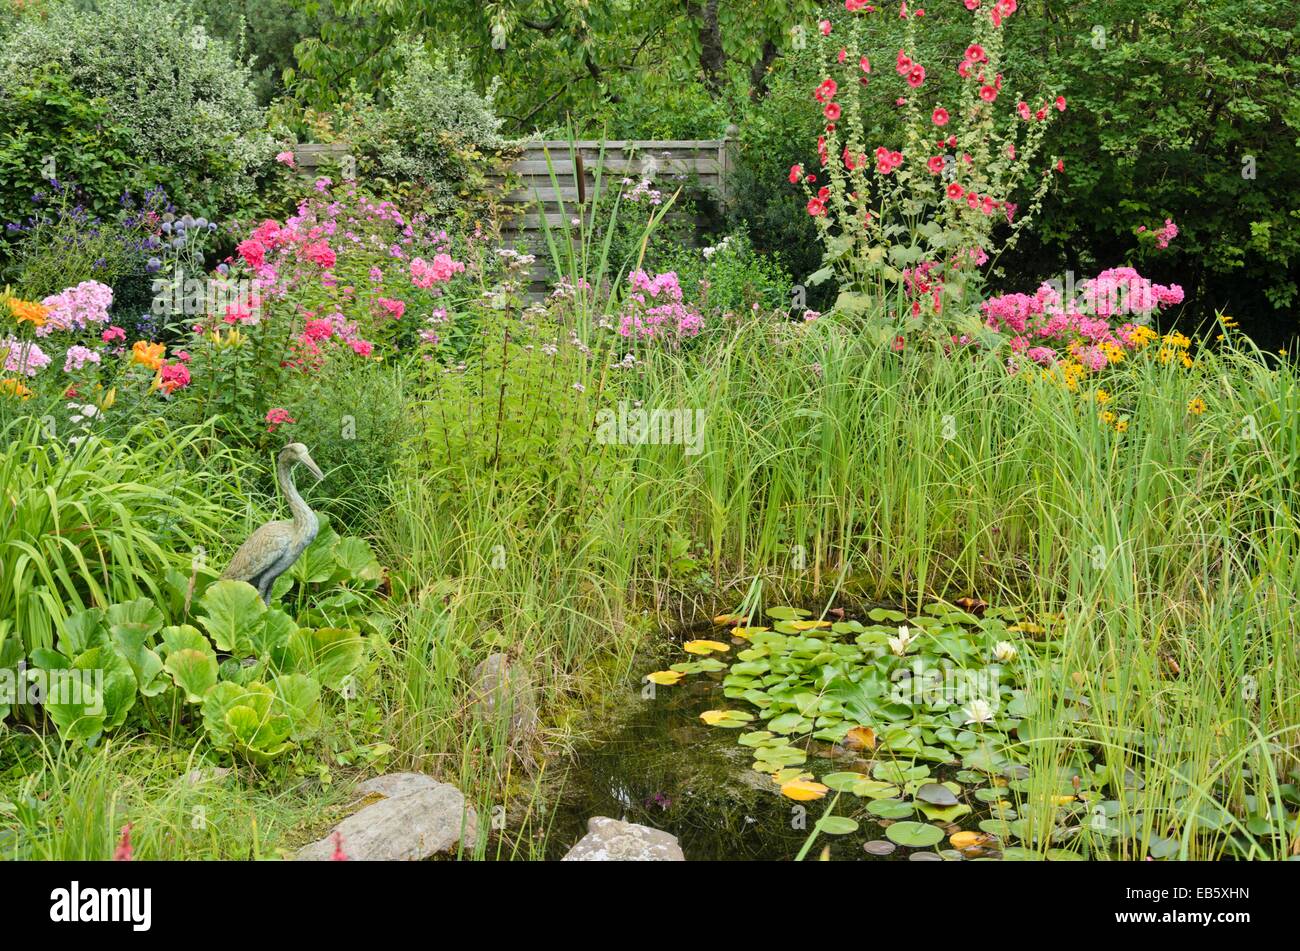 Garden phlox (Phlox paniculata), common hollyhock (Alcea rosea) and water lilies (Nymphaea) at a garden pond. Design: Marianne and Detlef Lüdke Stock Photo